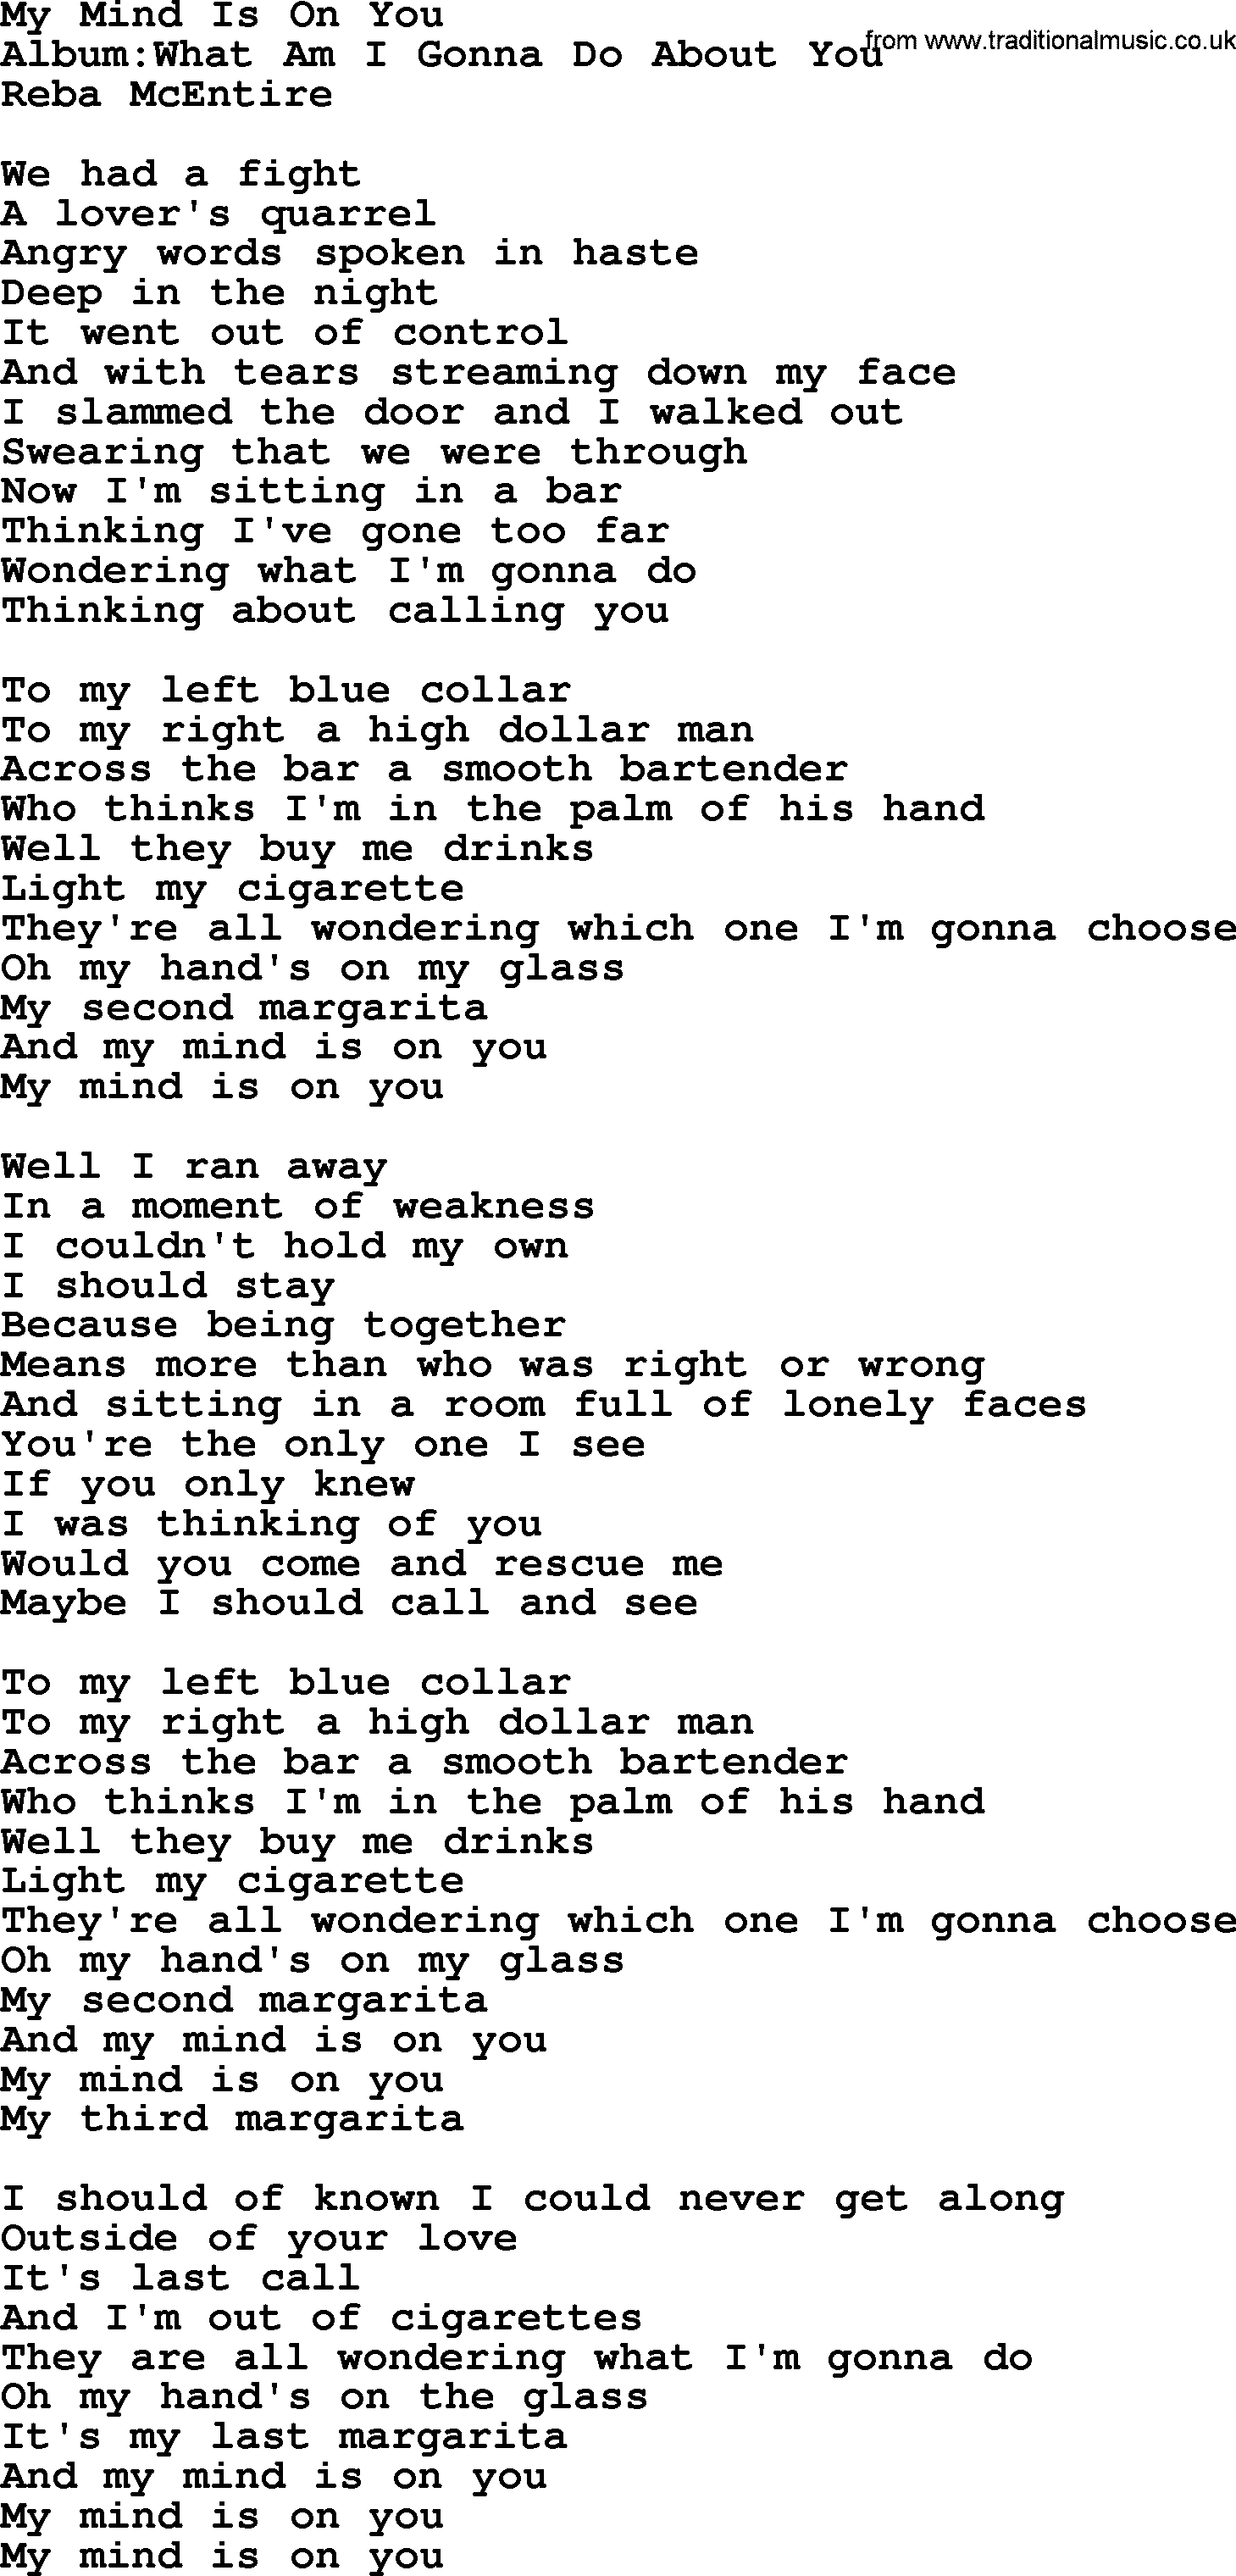 Reba McEntire song: My Mind Is On You lyrics